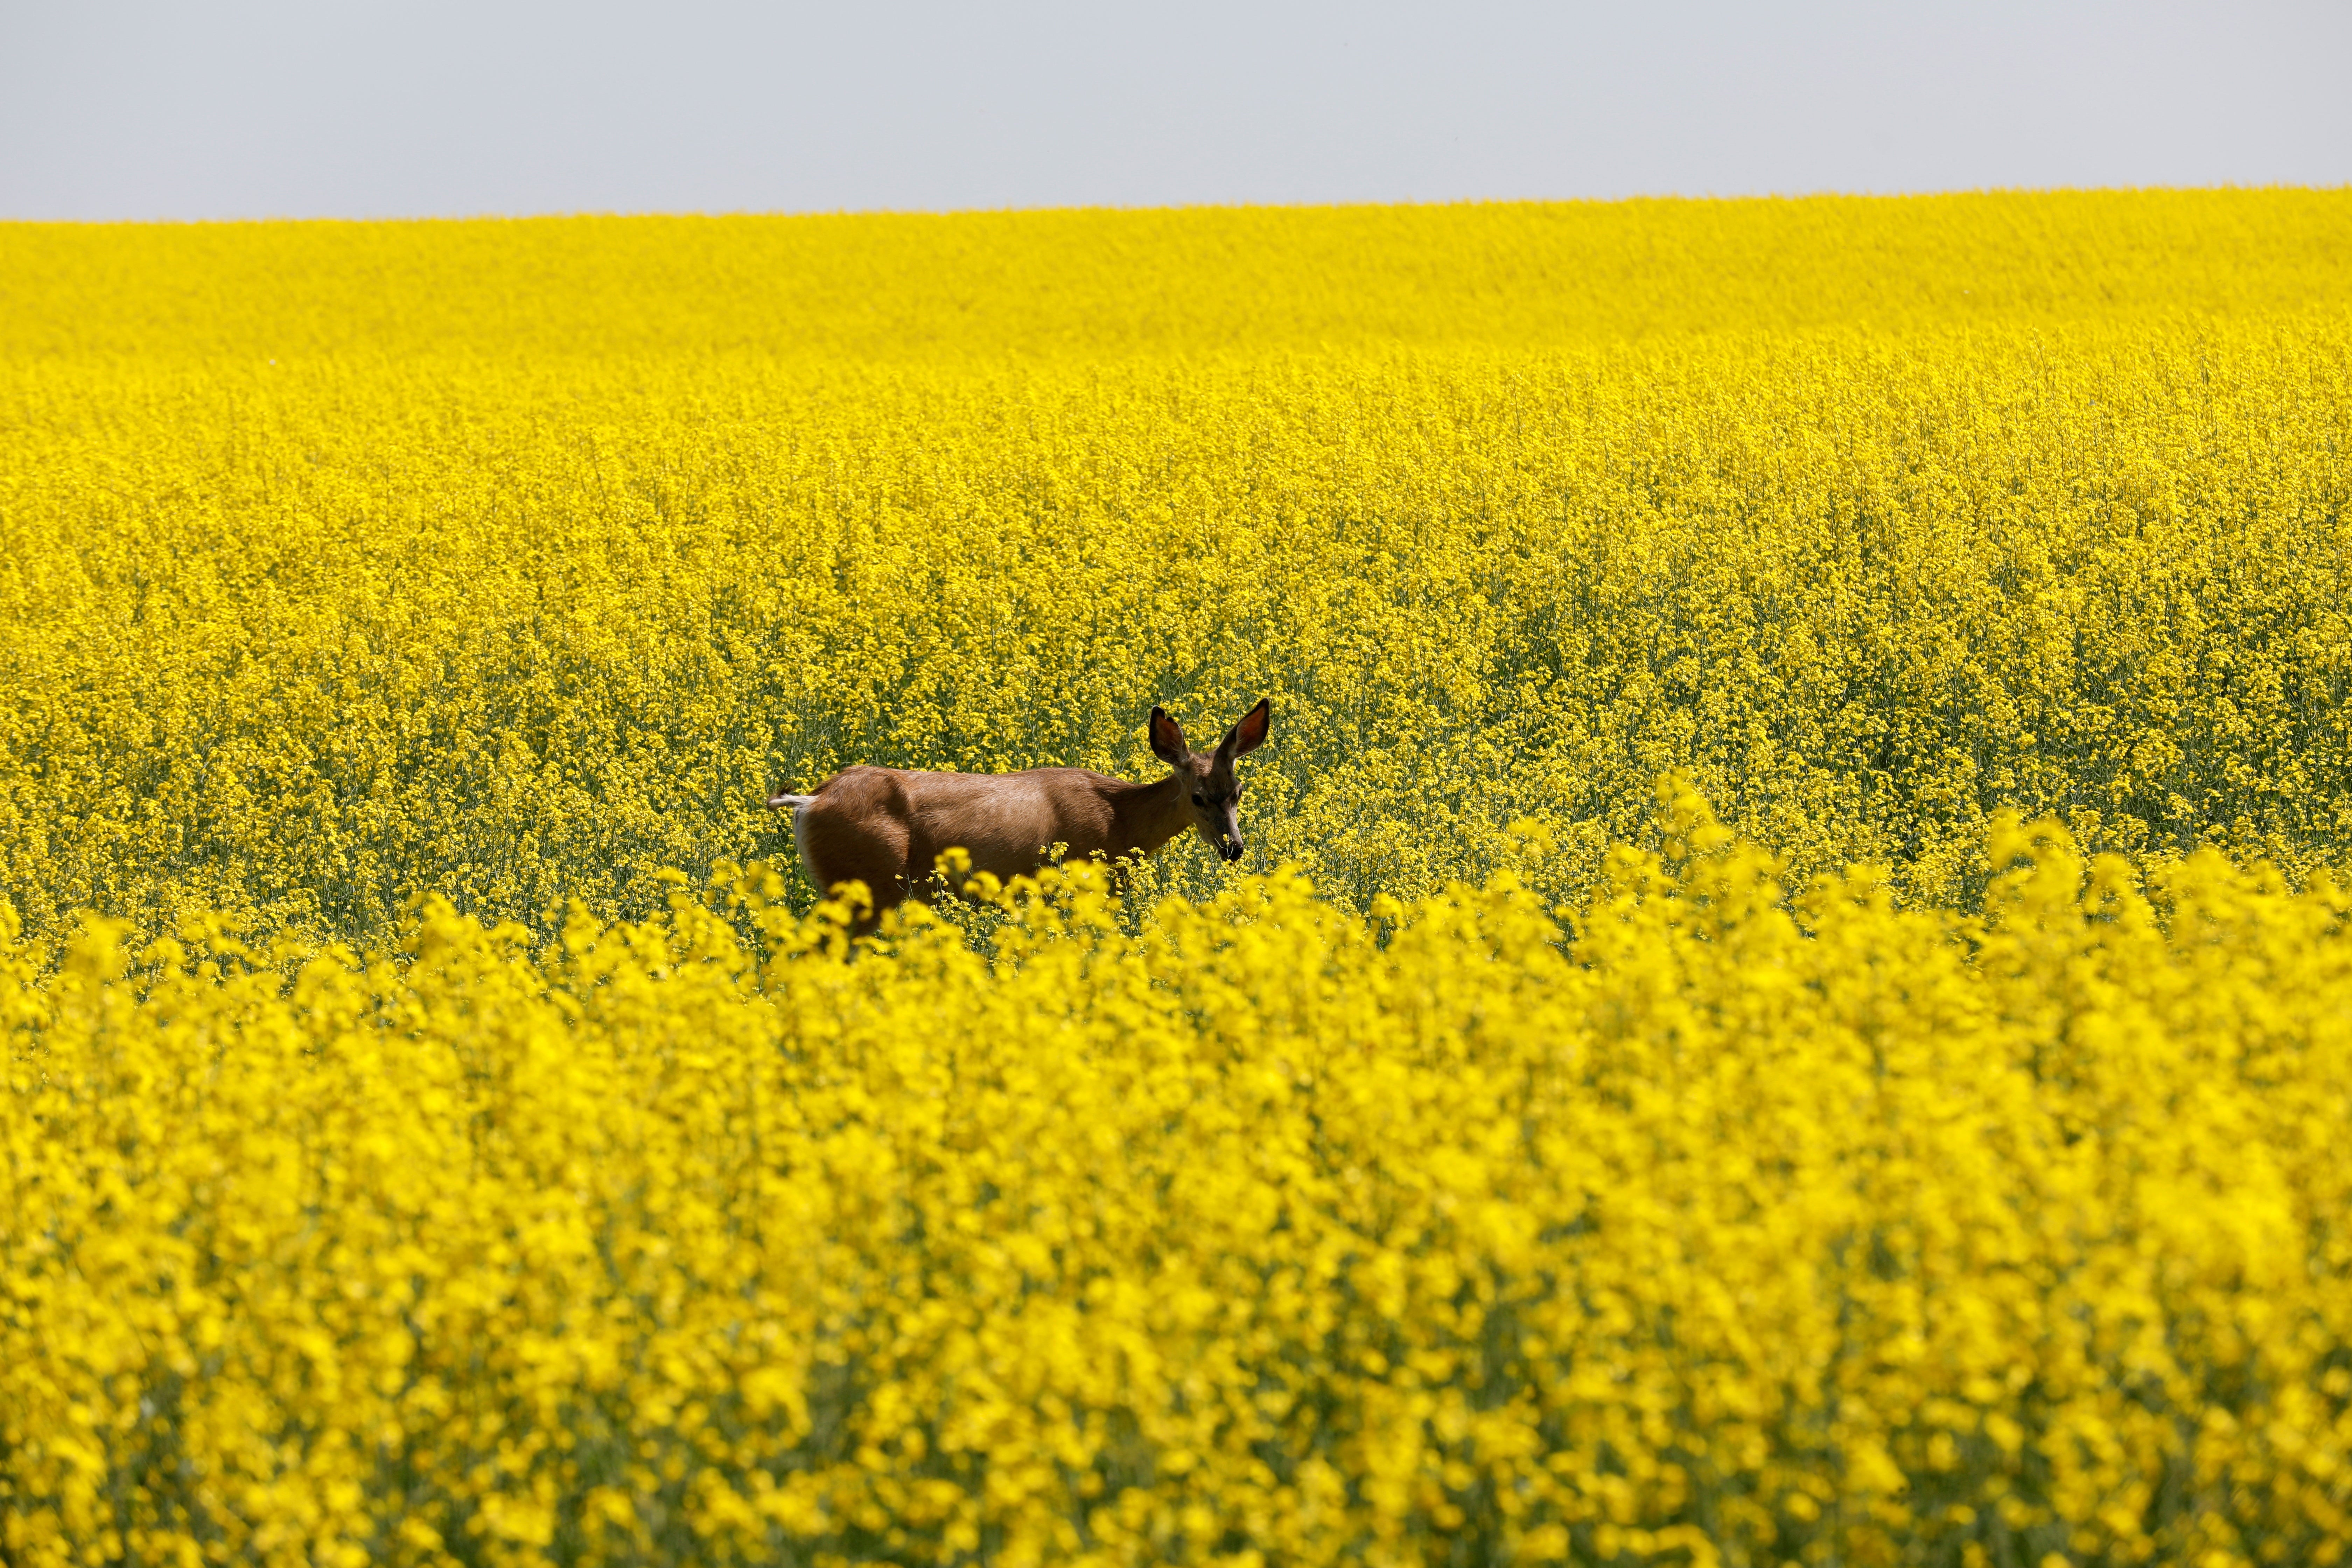 File: A deer feeds in a Western Canadian canola field in full bloom before harvest in rural Alberta, Canada